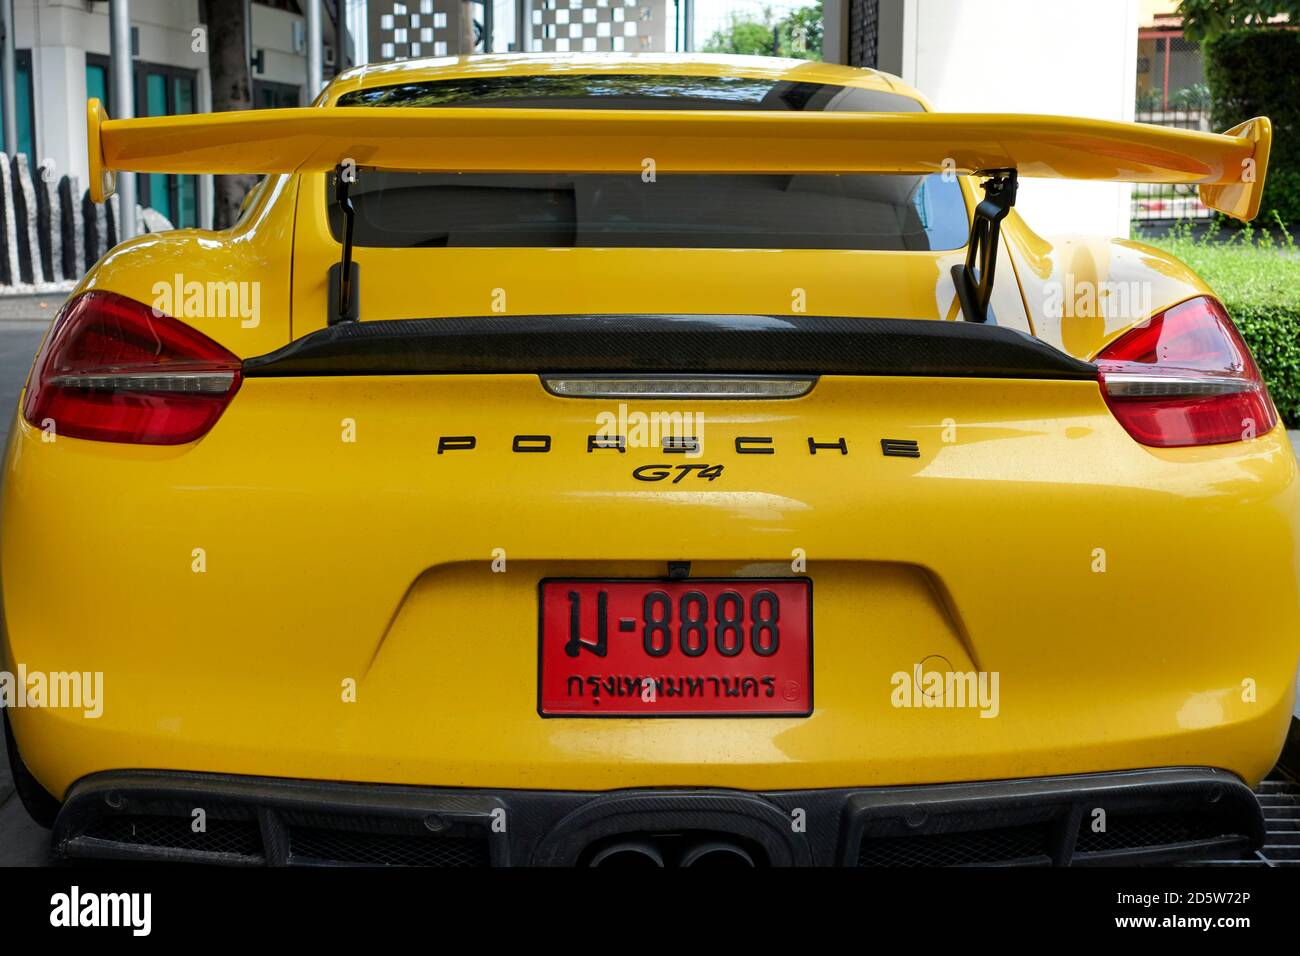 Porsche GT4 2020, 718 Cayman, yellow supercar, Thailand license plate, lucky number, 8888, Stock Photo